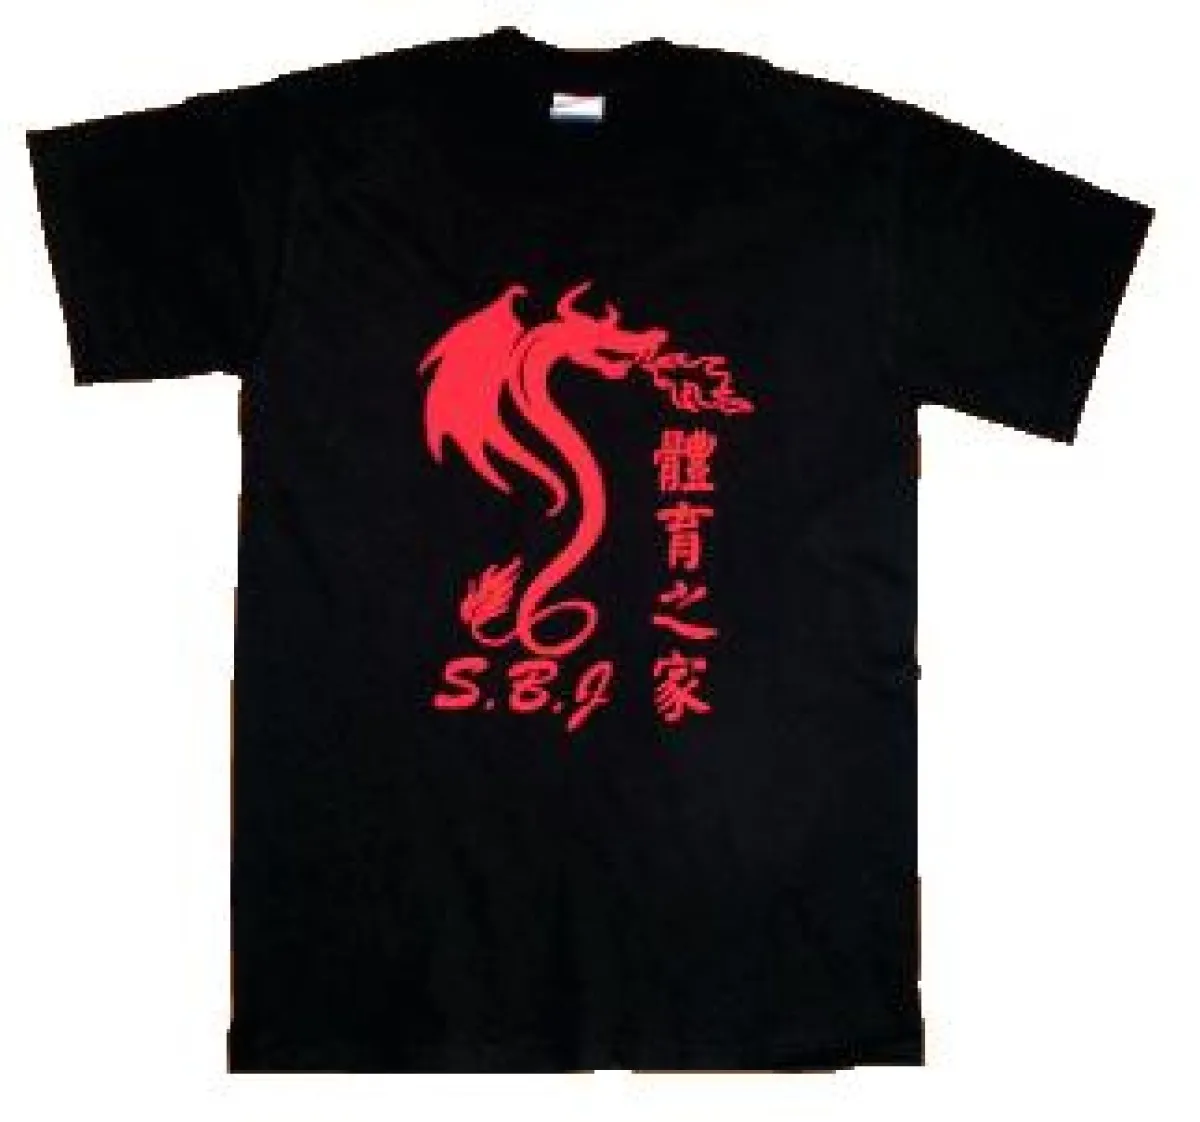 T-shirt Dragon